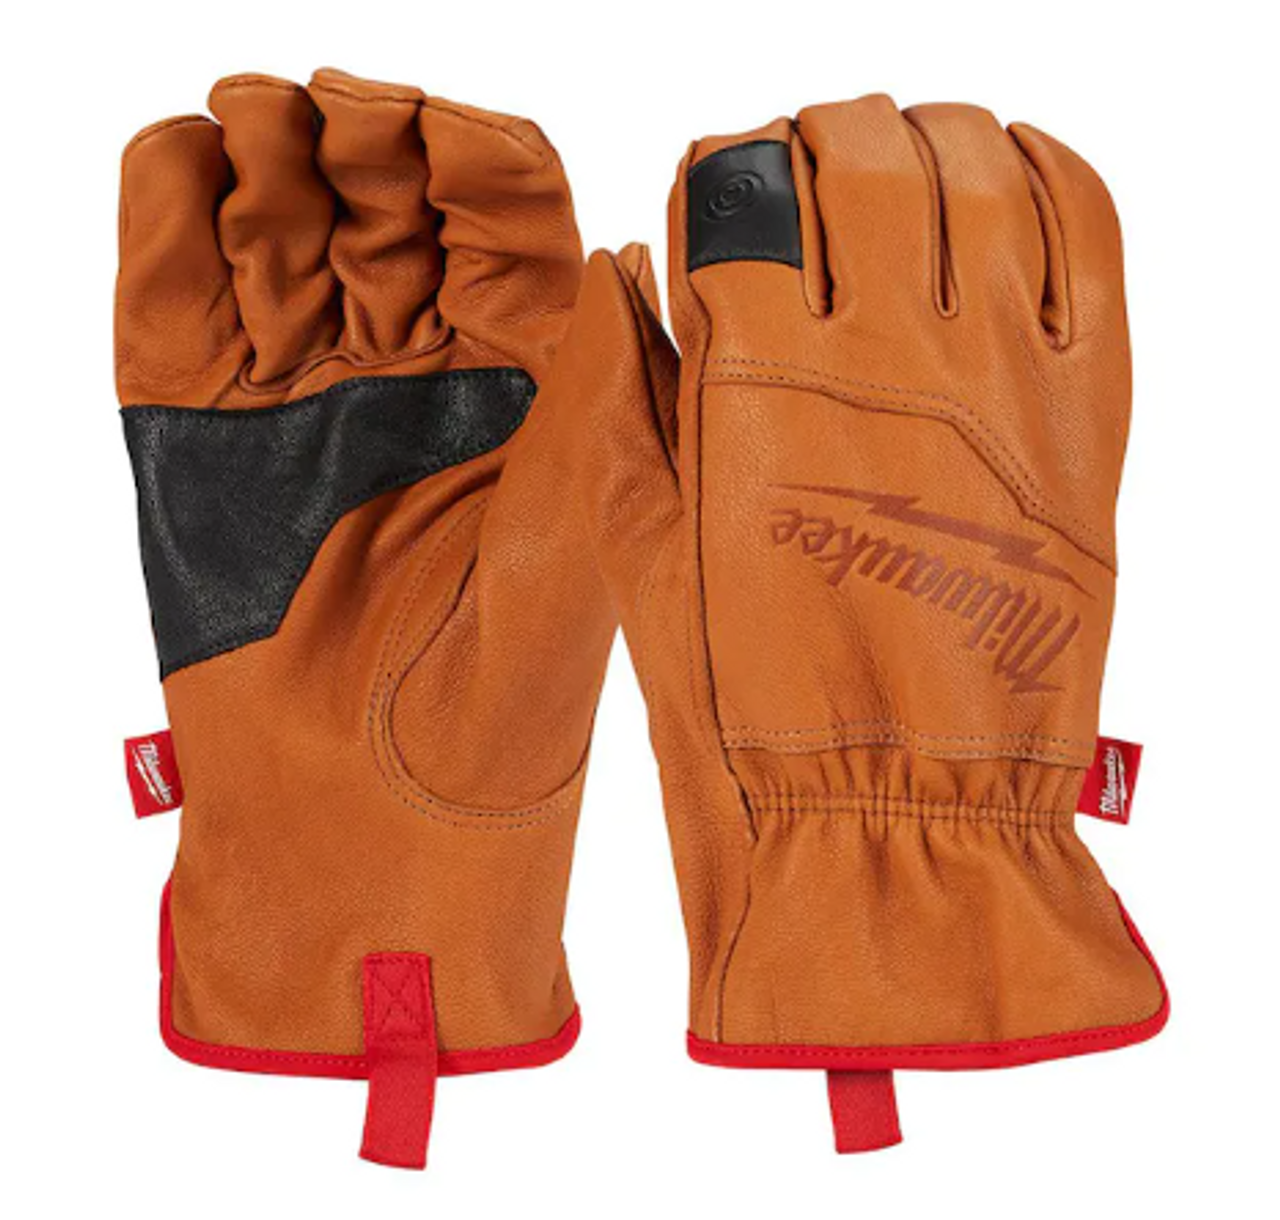 Milwaukee Large Goatskin Leather Gloves 48-73-0012D (4 Pair)